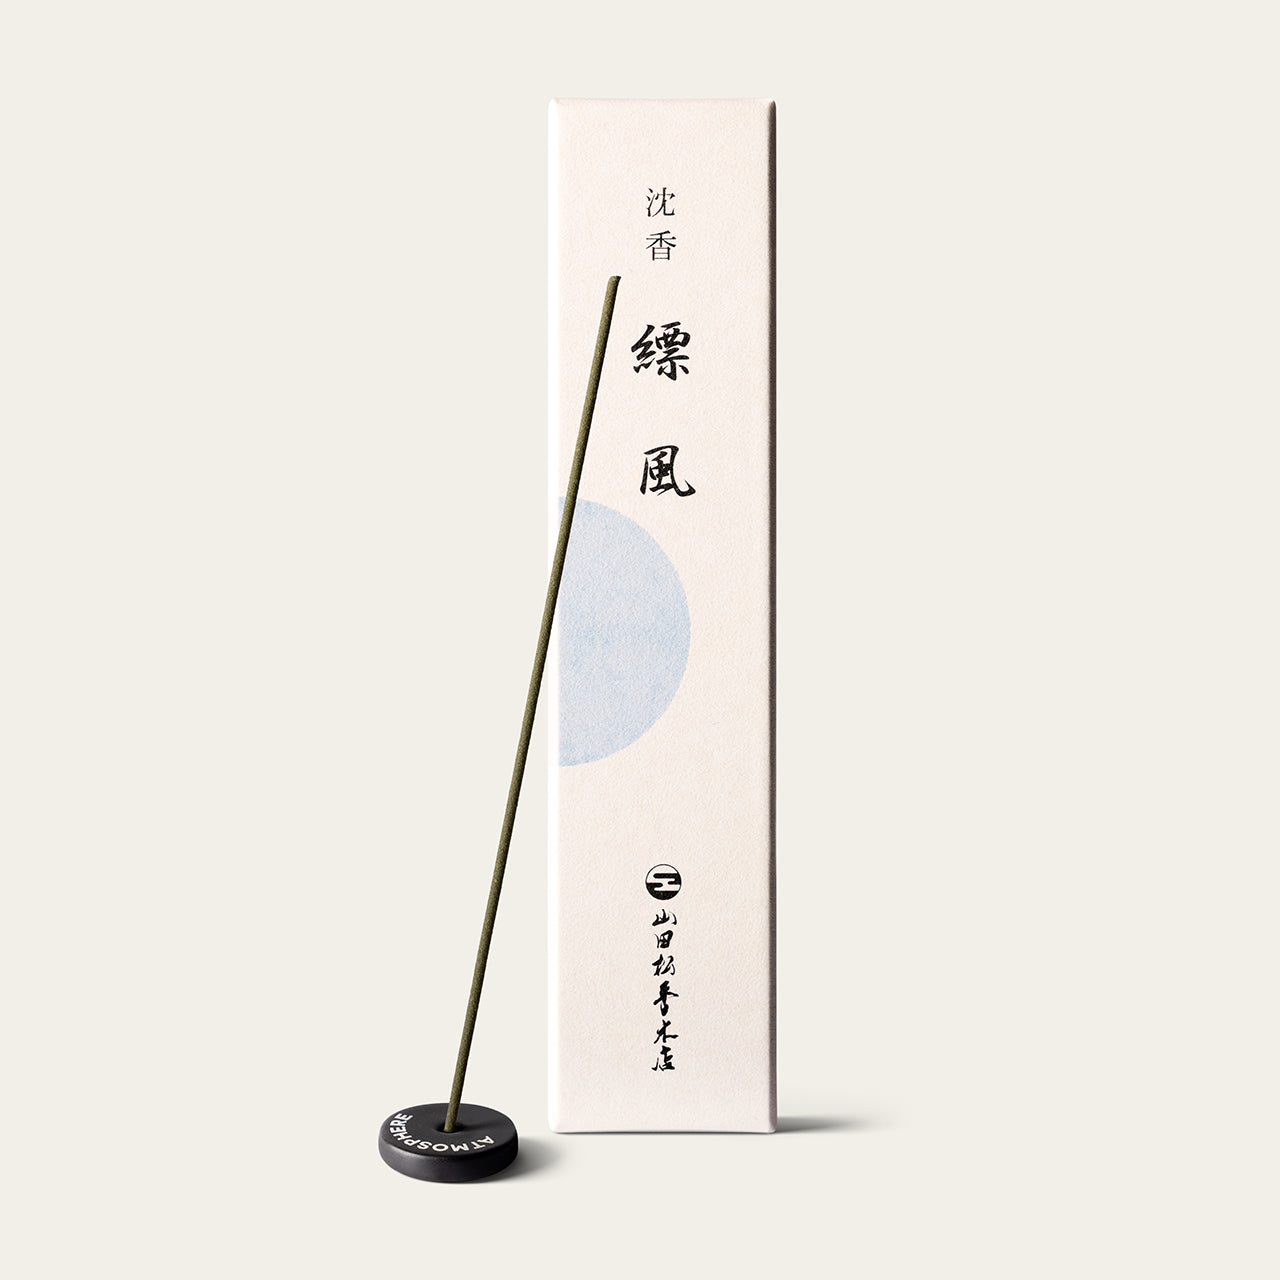 Yamadamatsu Premium Blue Wind Hyofu Japanese incense sticks (75 sticks) with Atmosphere ceramic incense holder